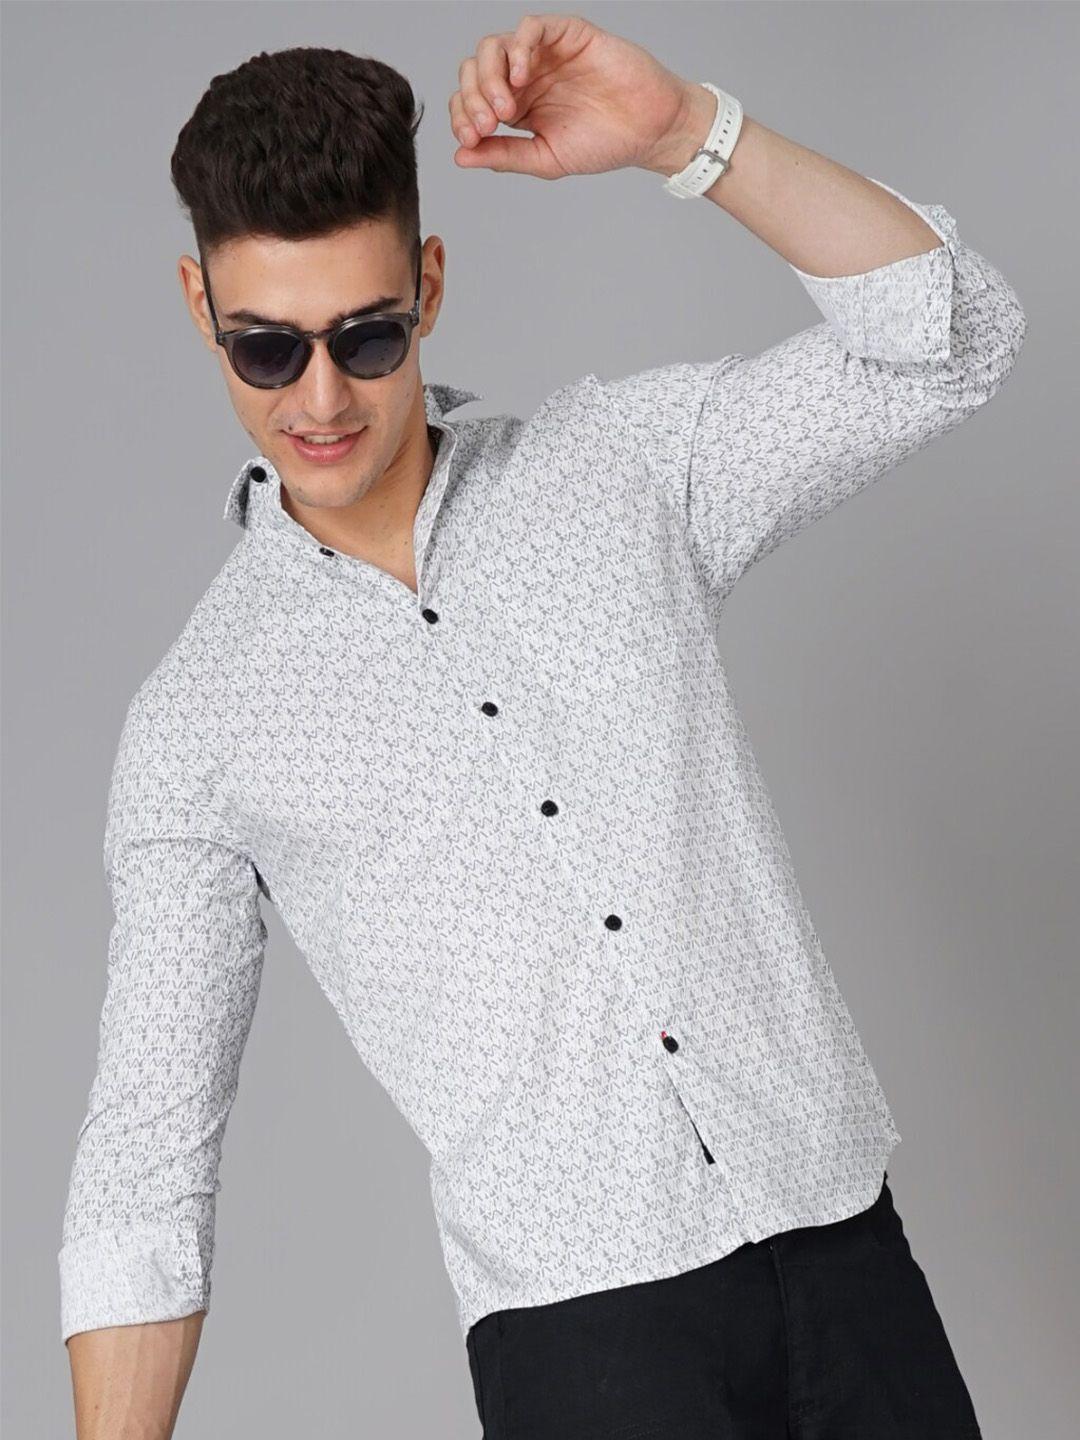 paul-street-men-white-standard-slim-fit-opaque-printed-casual-shirt